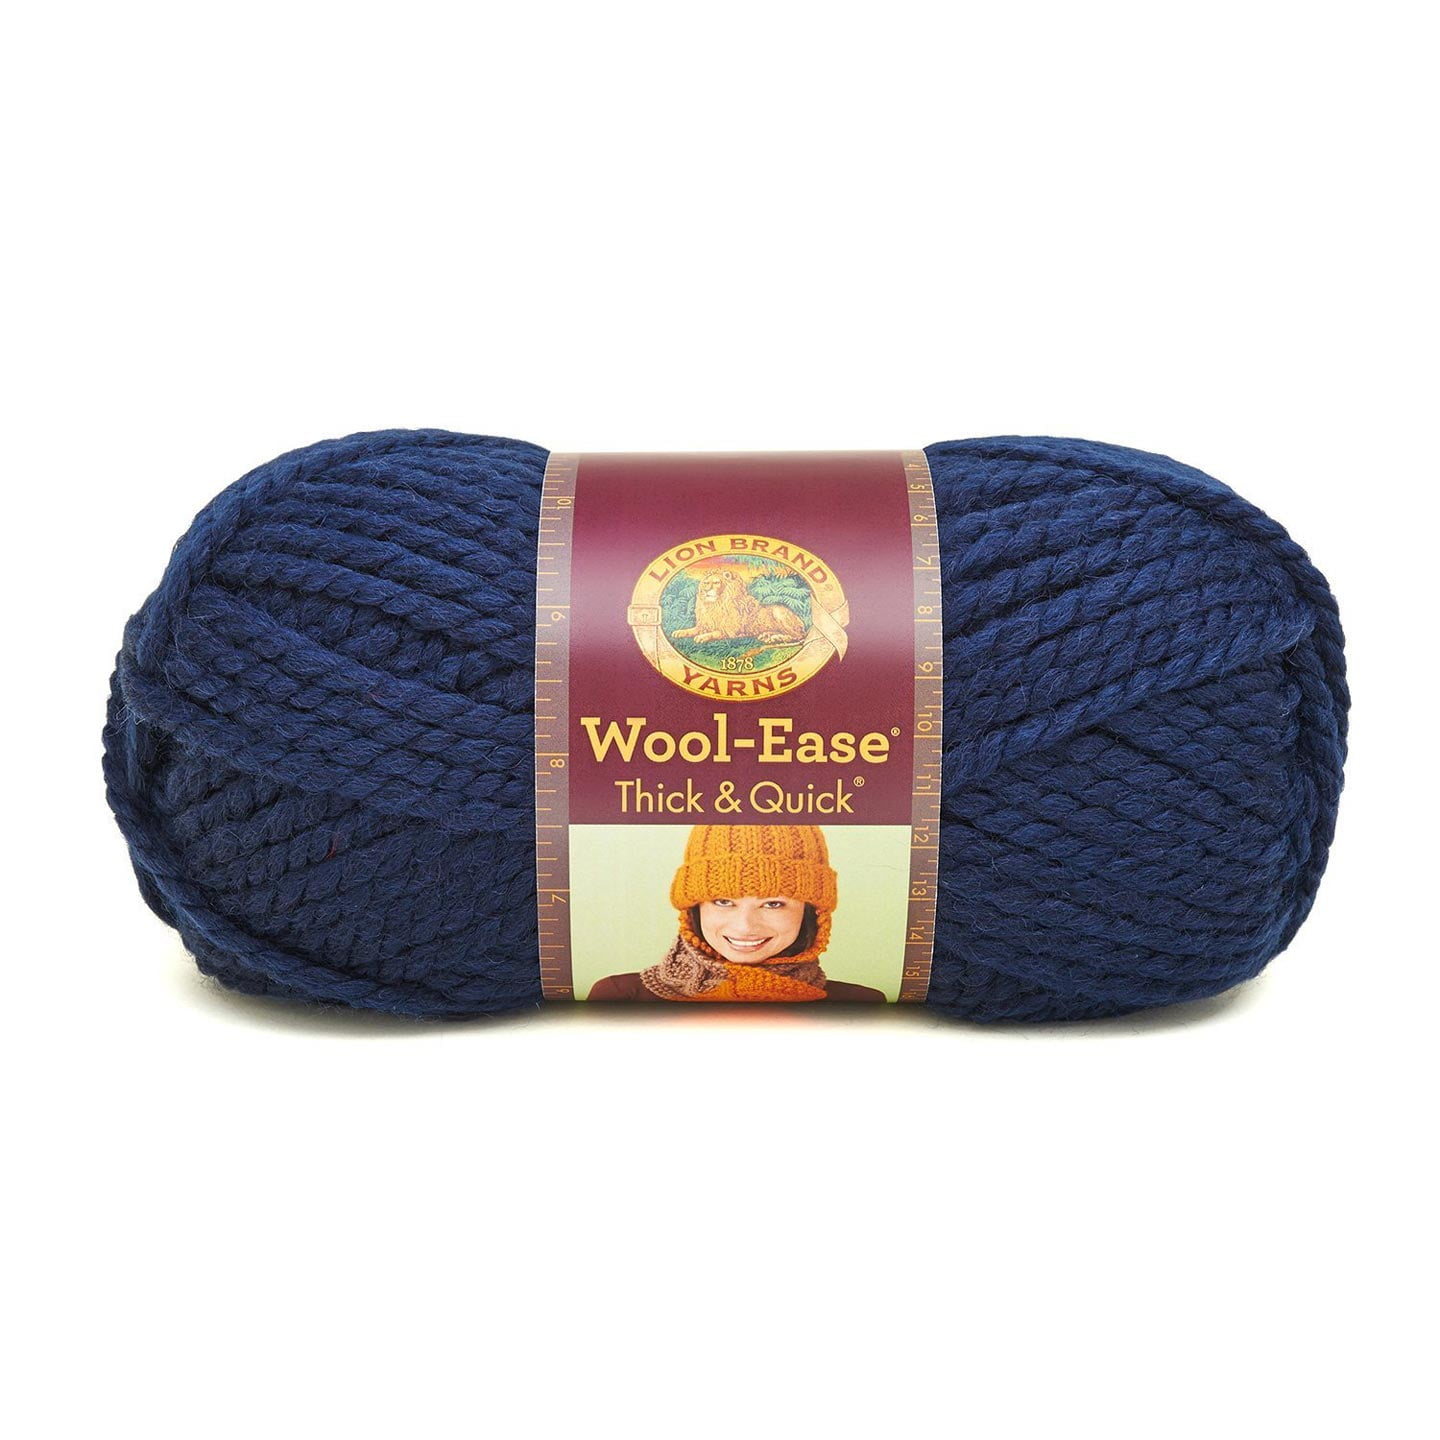 Lion Brand x Rit Fishermen's Wool Yarn Dye Kit - Kelly Green, Purple, and Petal Pink